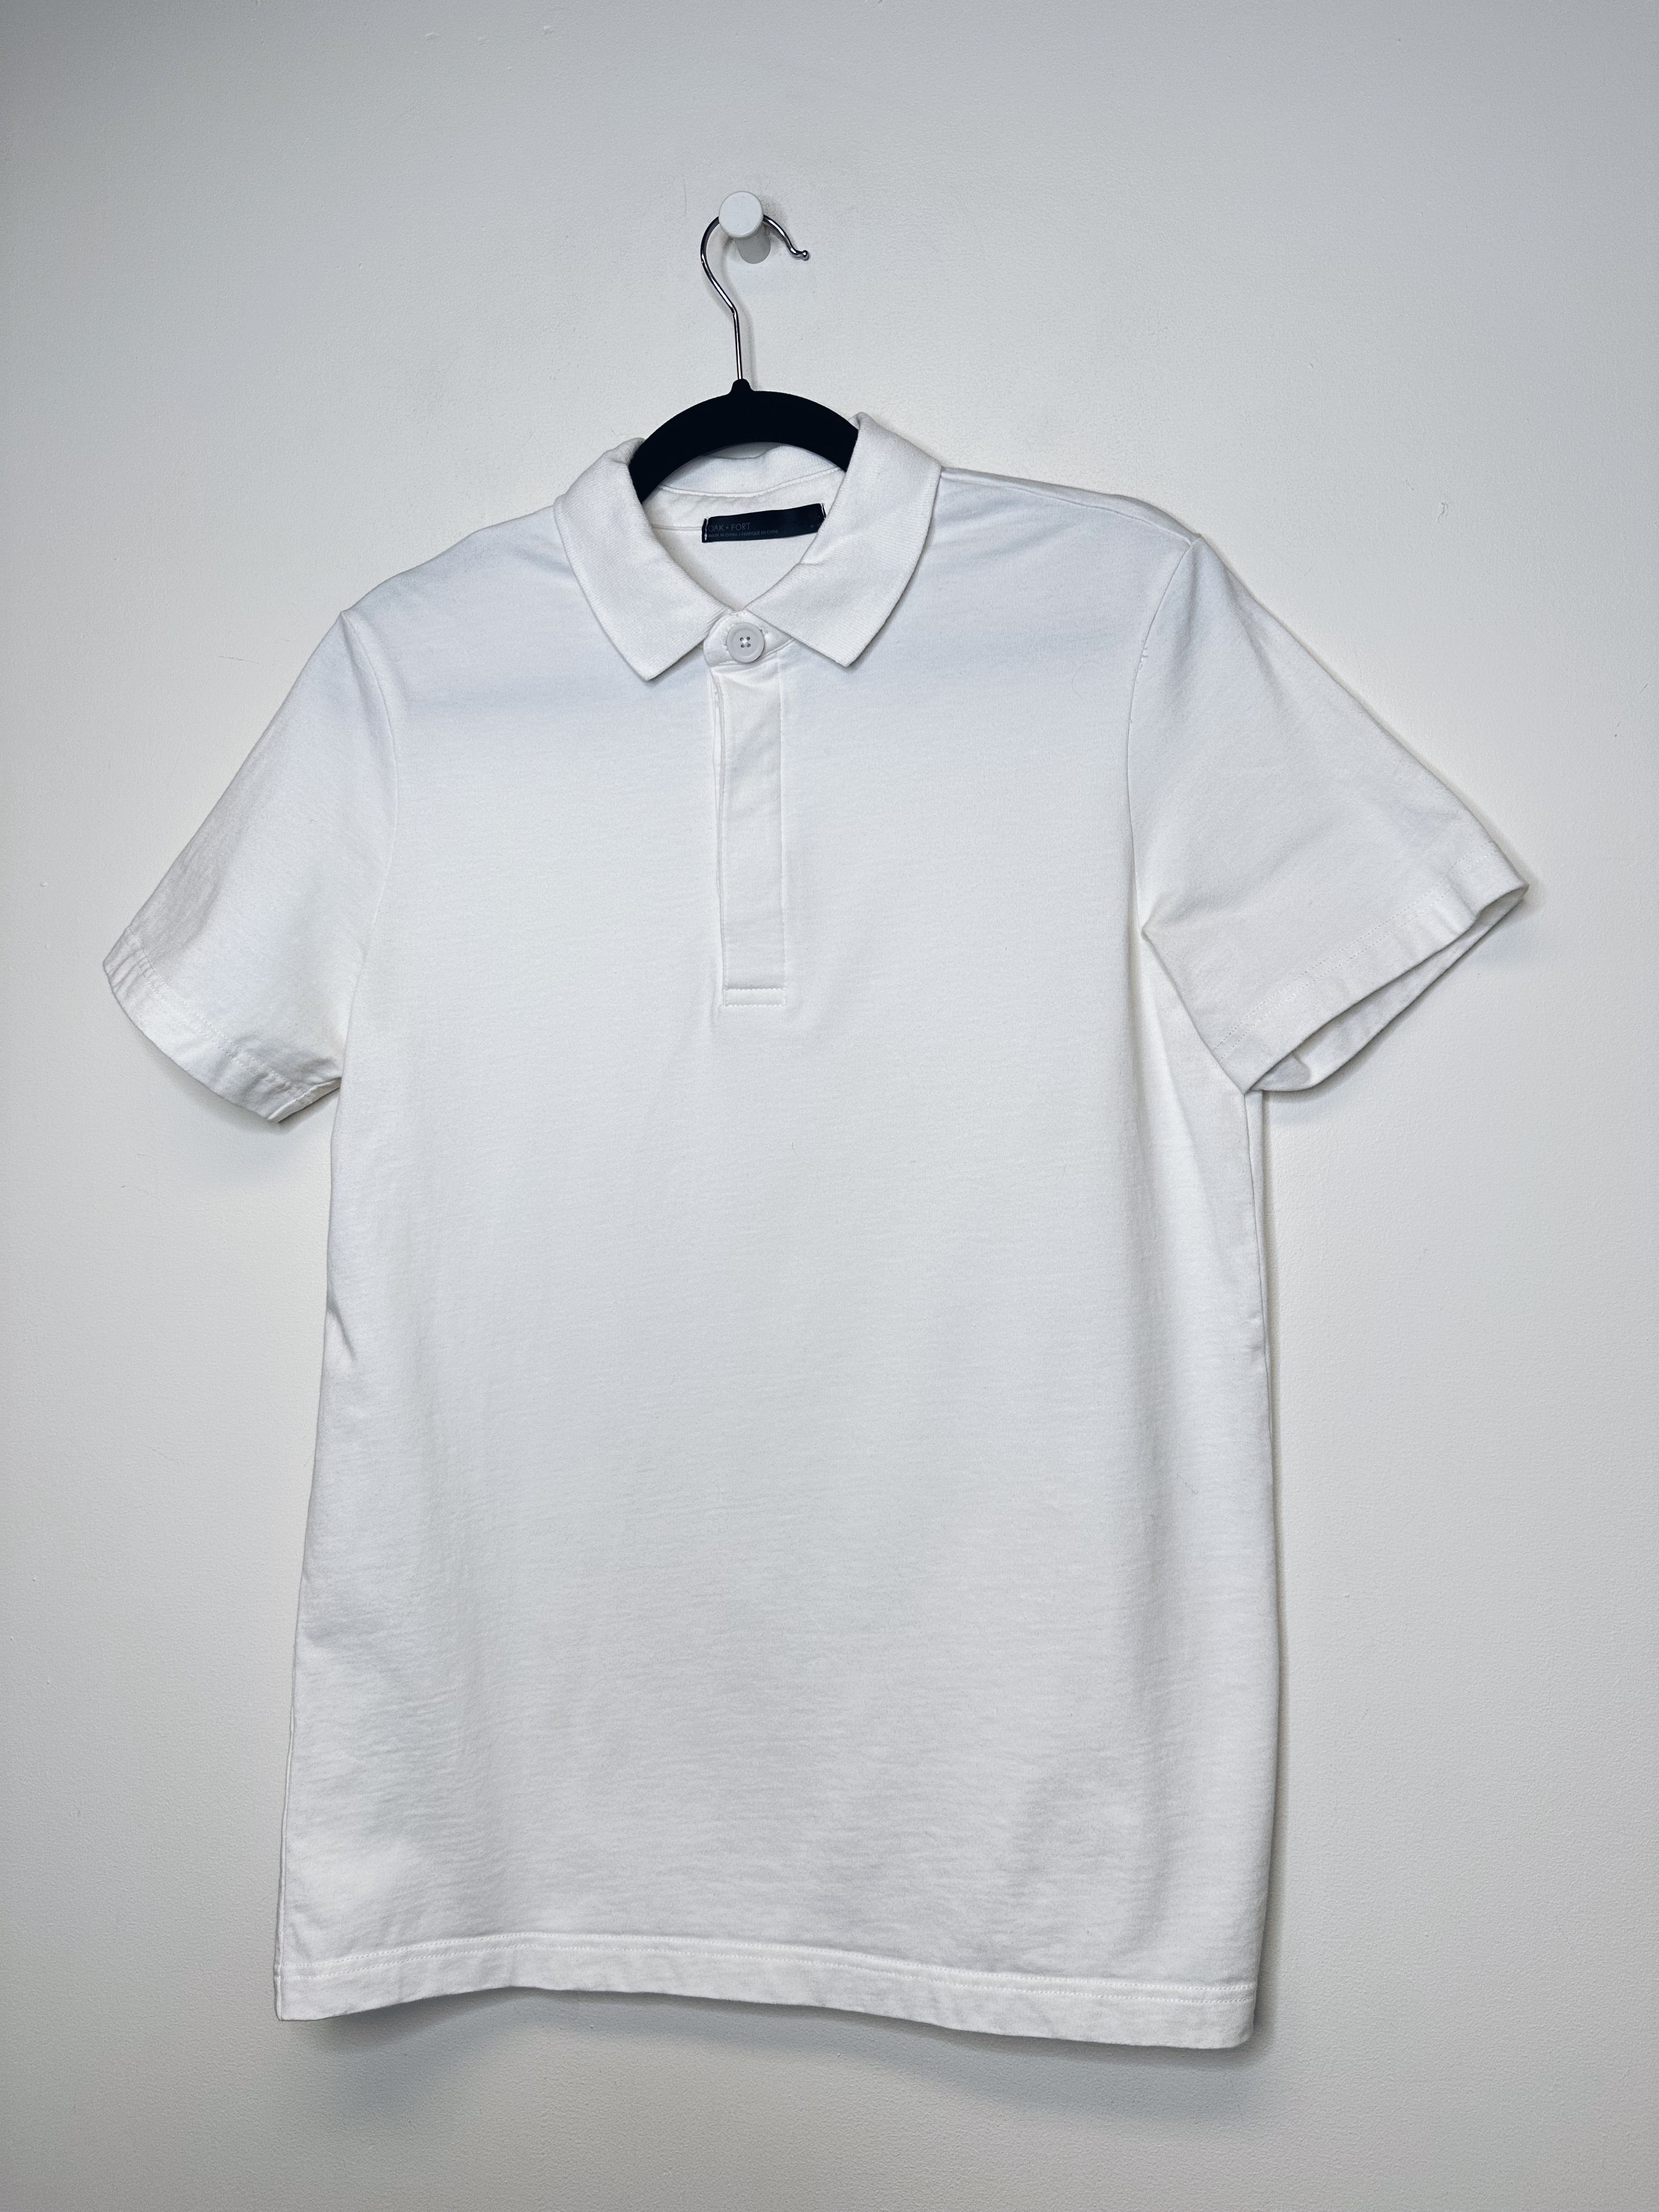 Oak + Fort Cream Polo Shirt - M